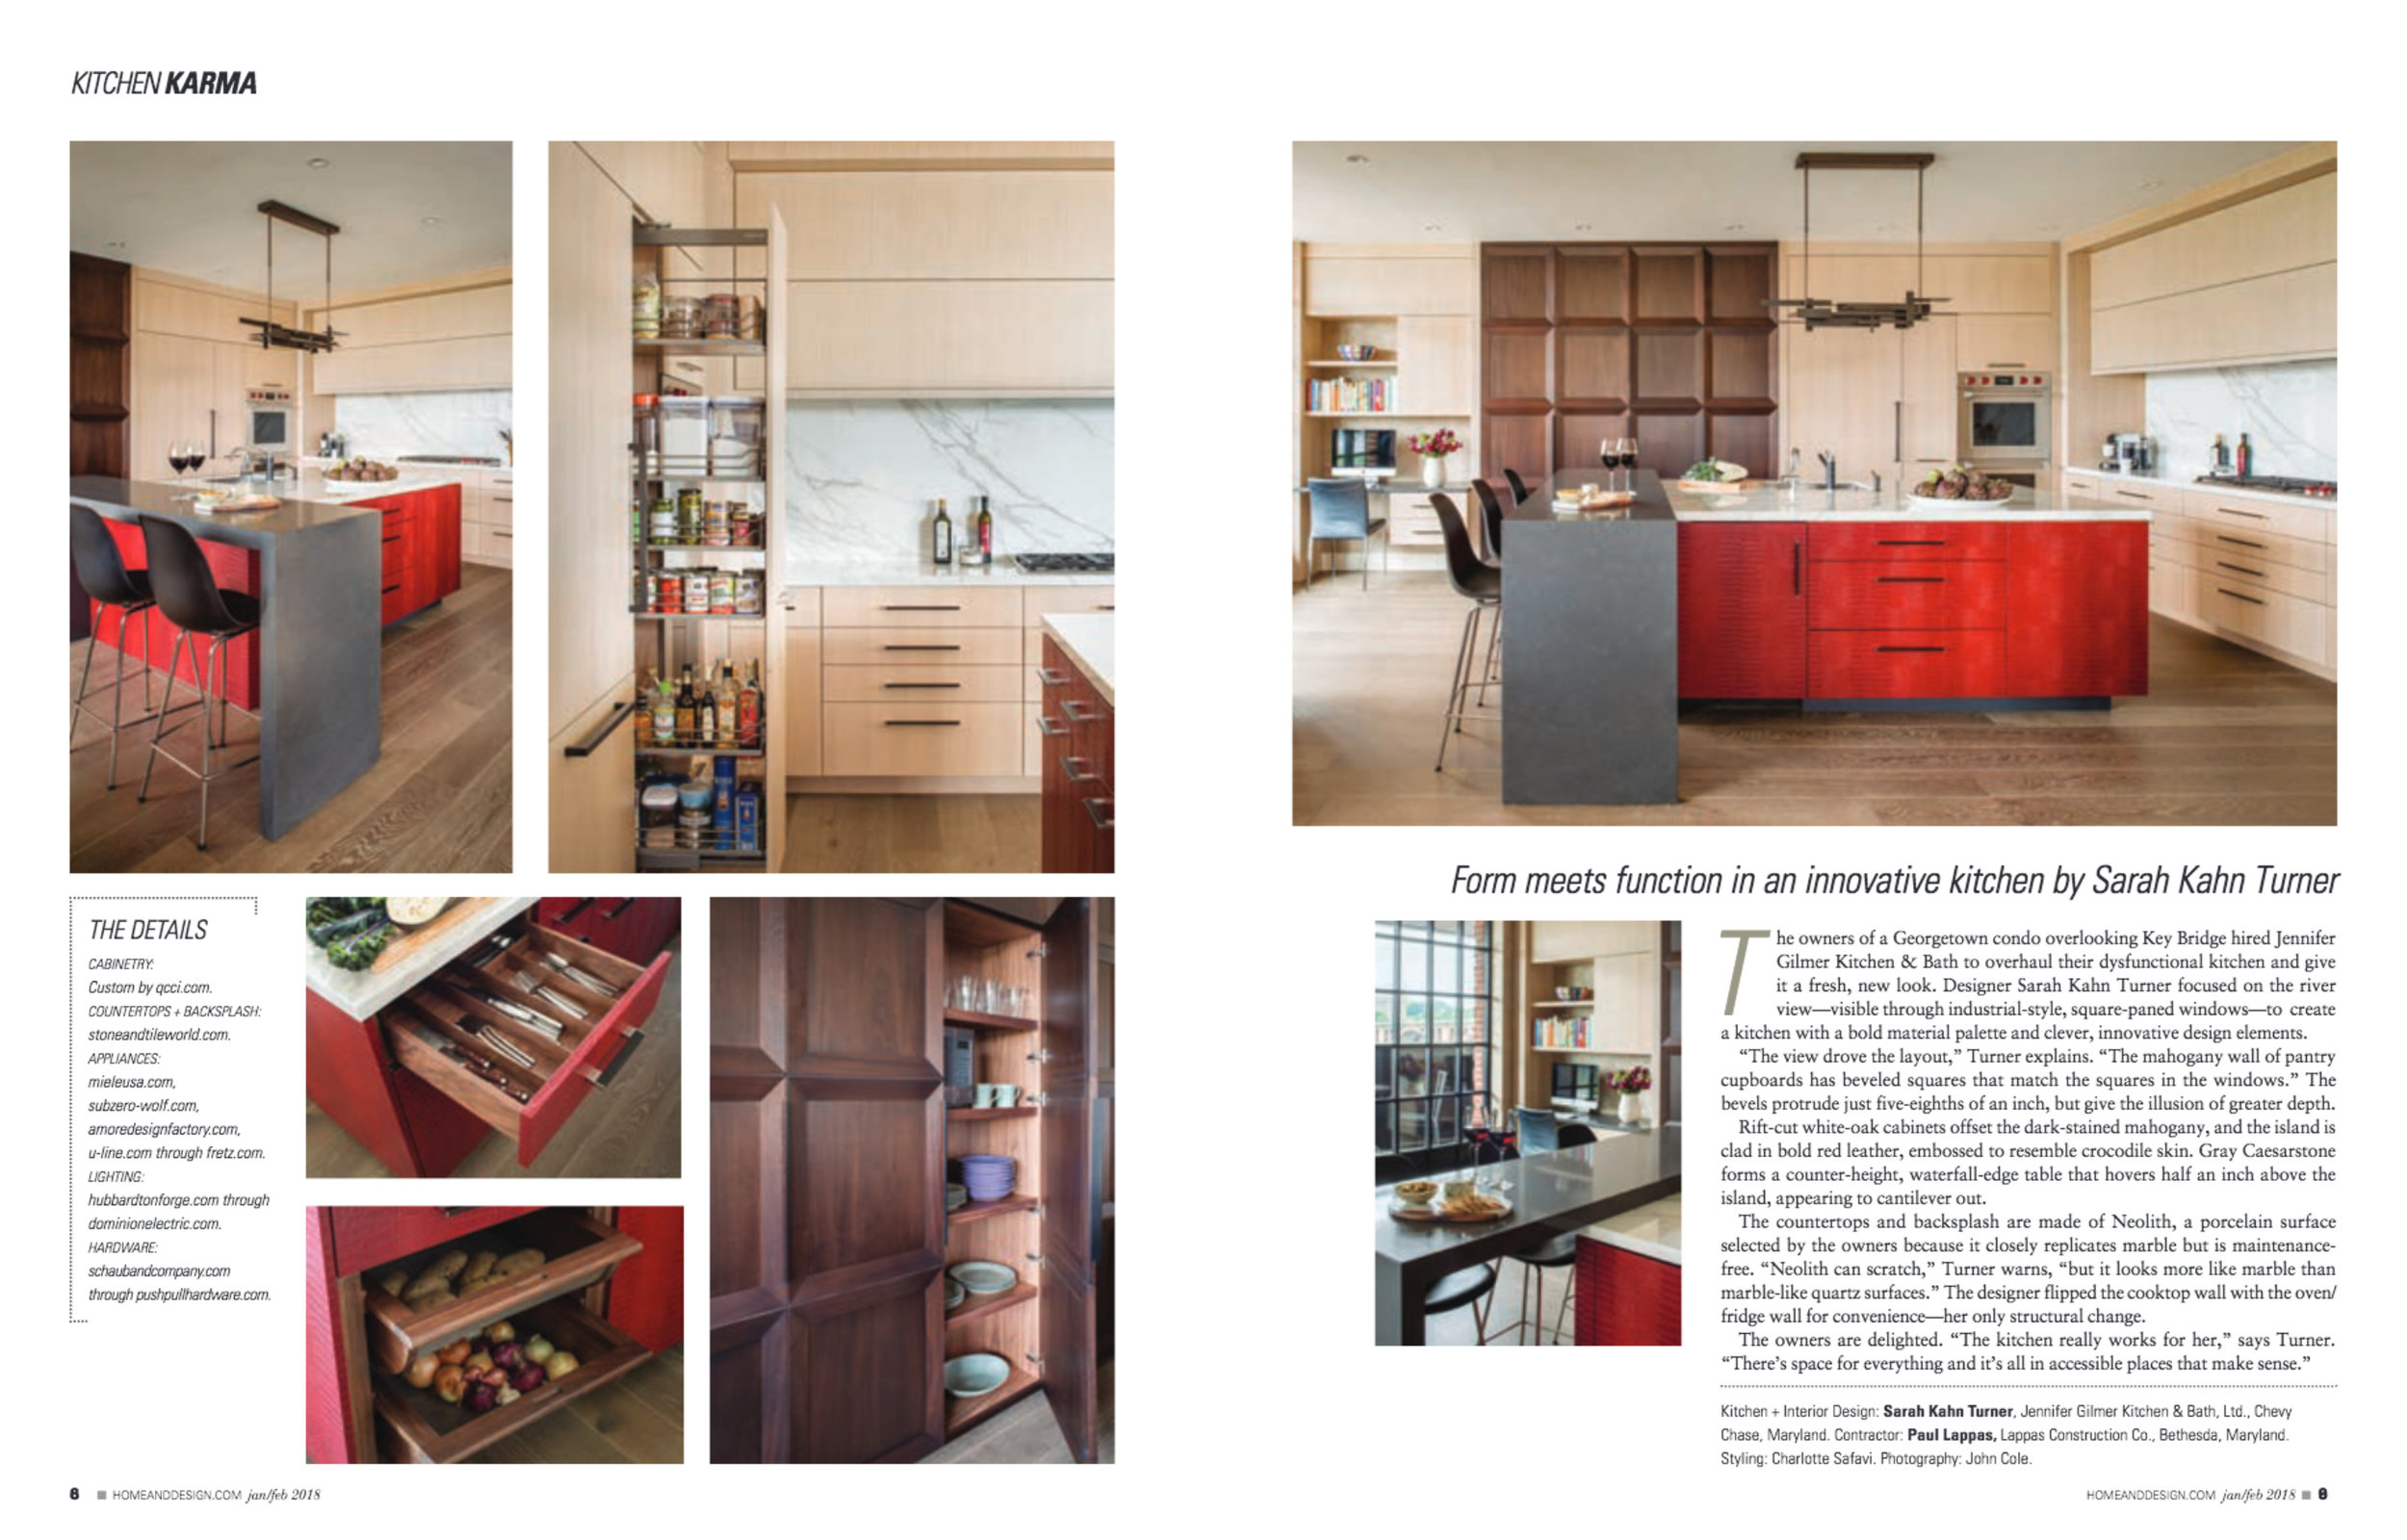   Home &amp; Design Magazine  Winter 2018 Issue Jennifer Gilmer Kitchen &amp; Bath 